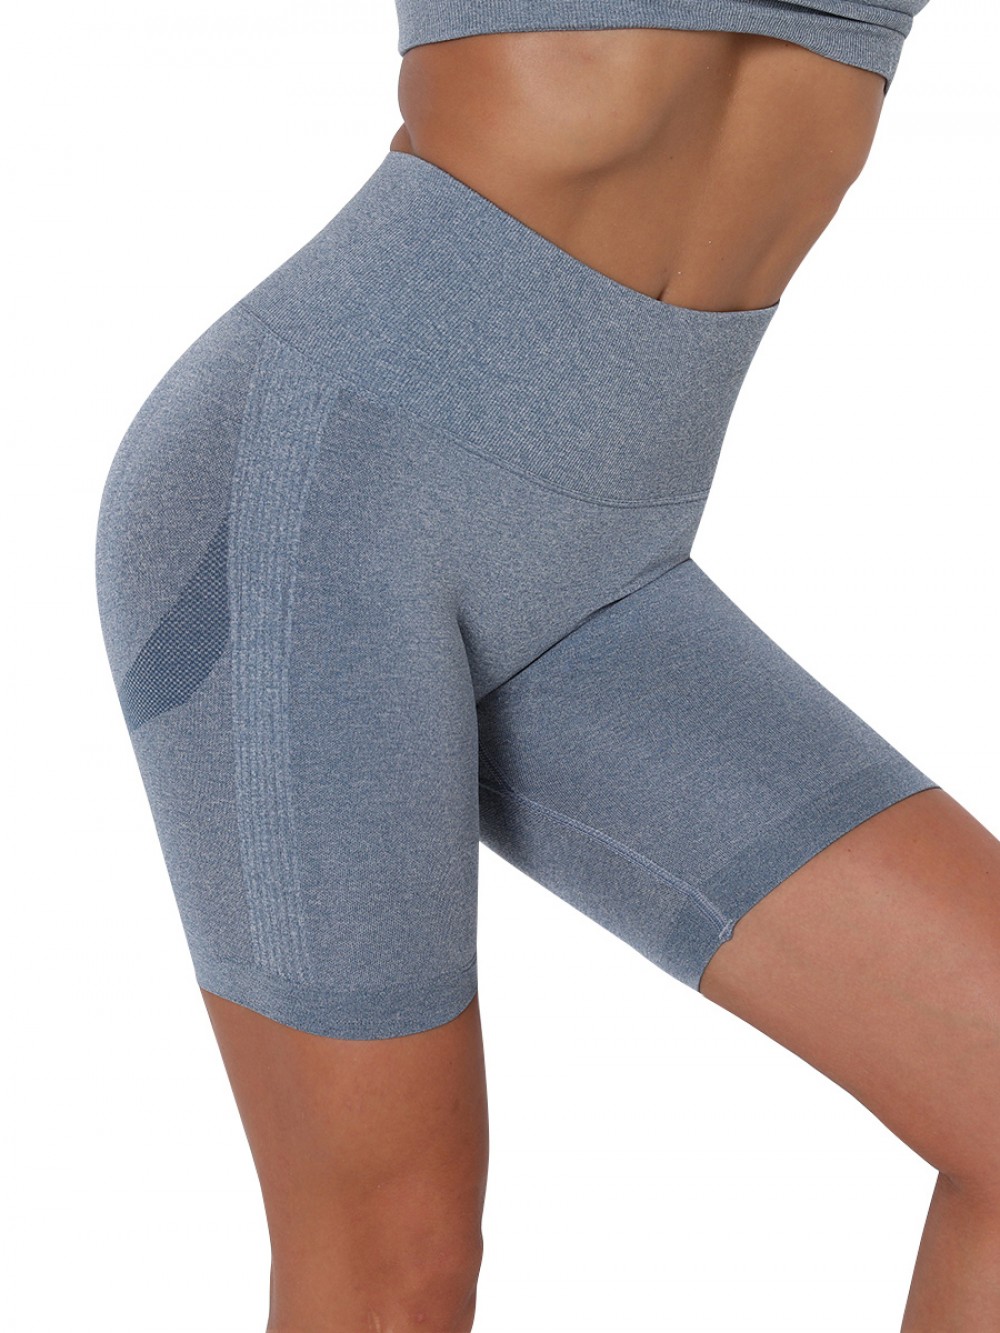 Blue Thigh Length Seamless Yoga Shorts For Running Girl